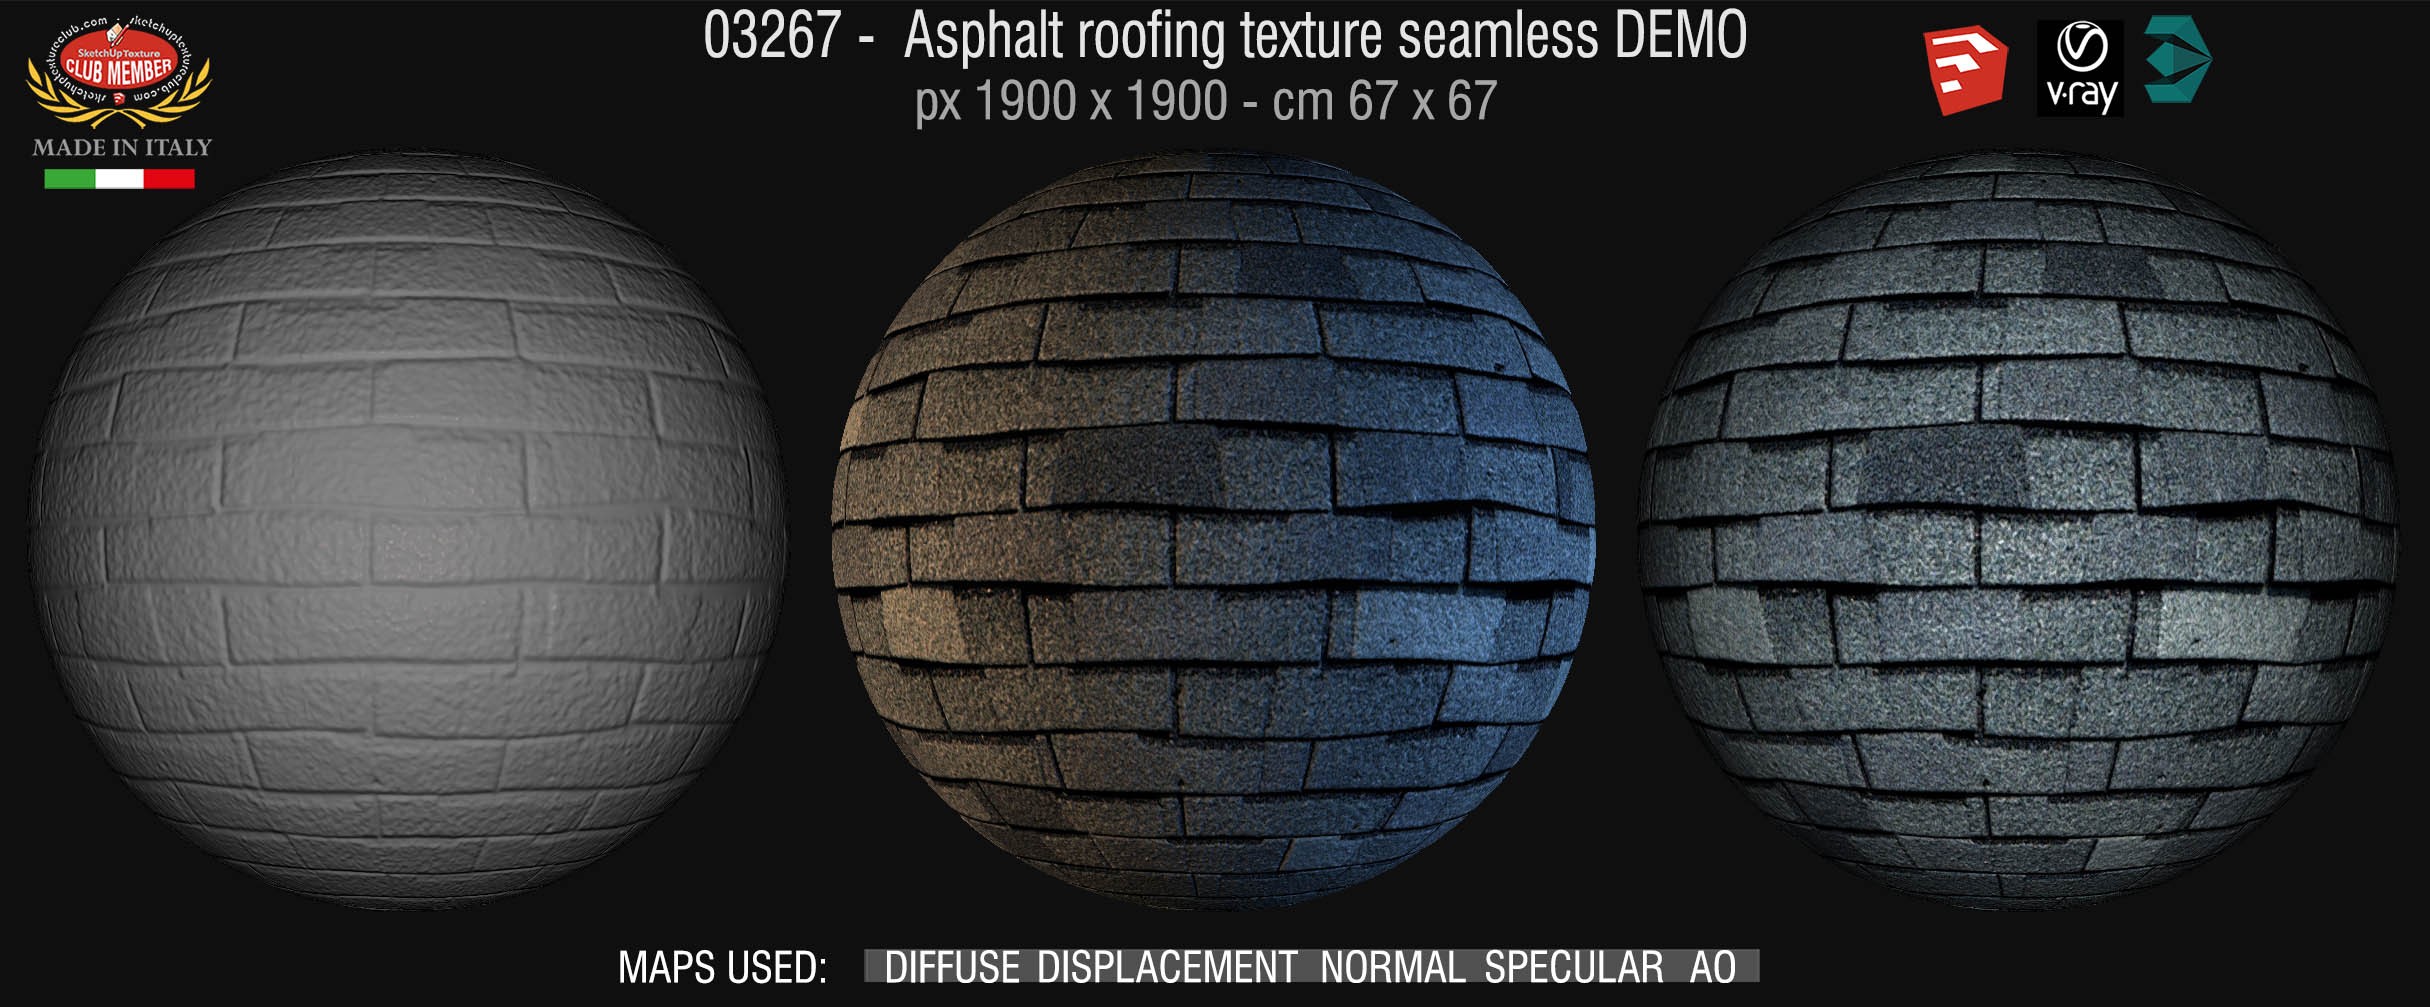 03267 Asphalt roofing texture seamless + maps DEMO